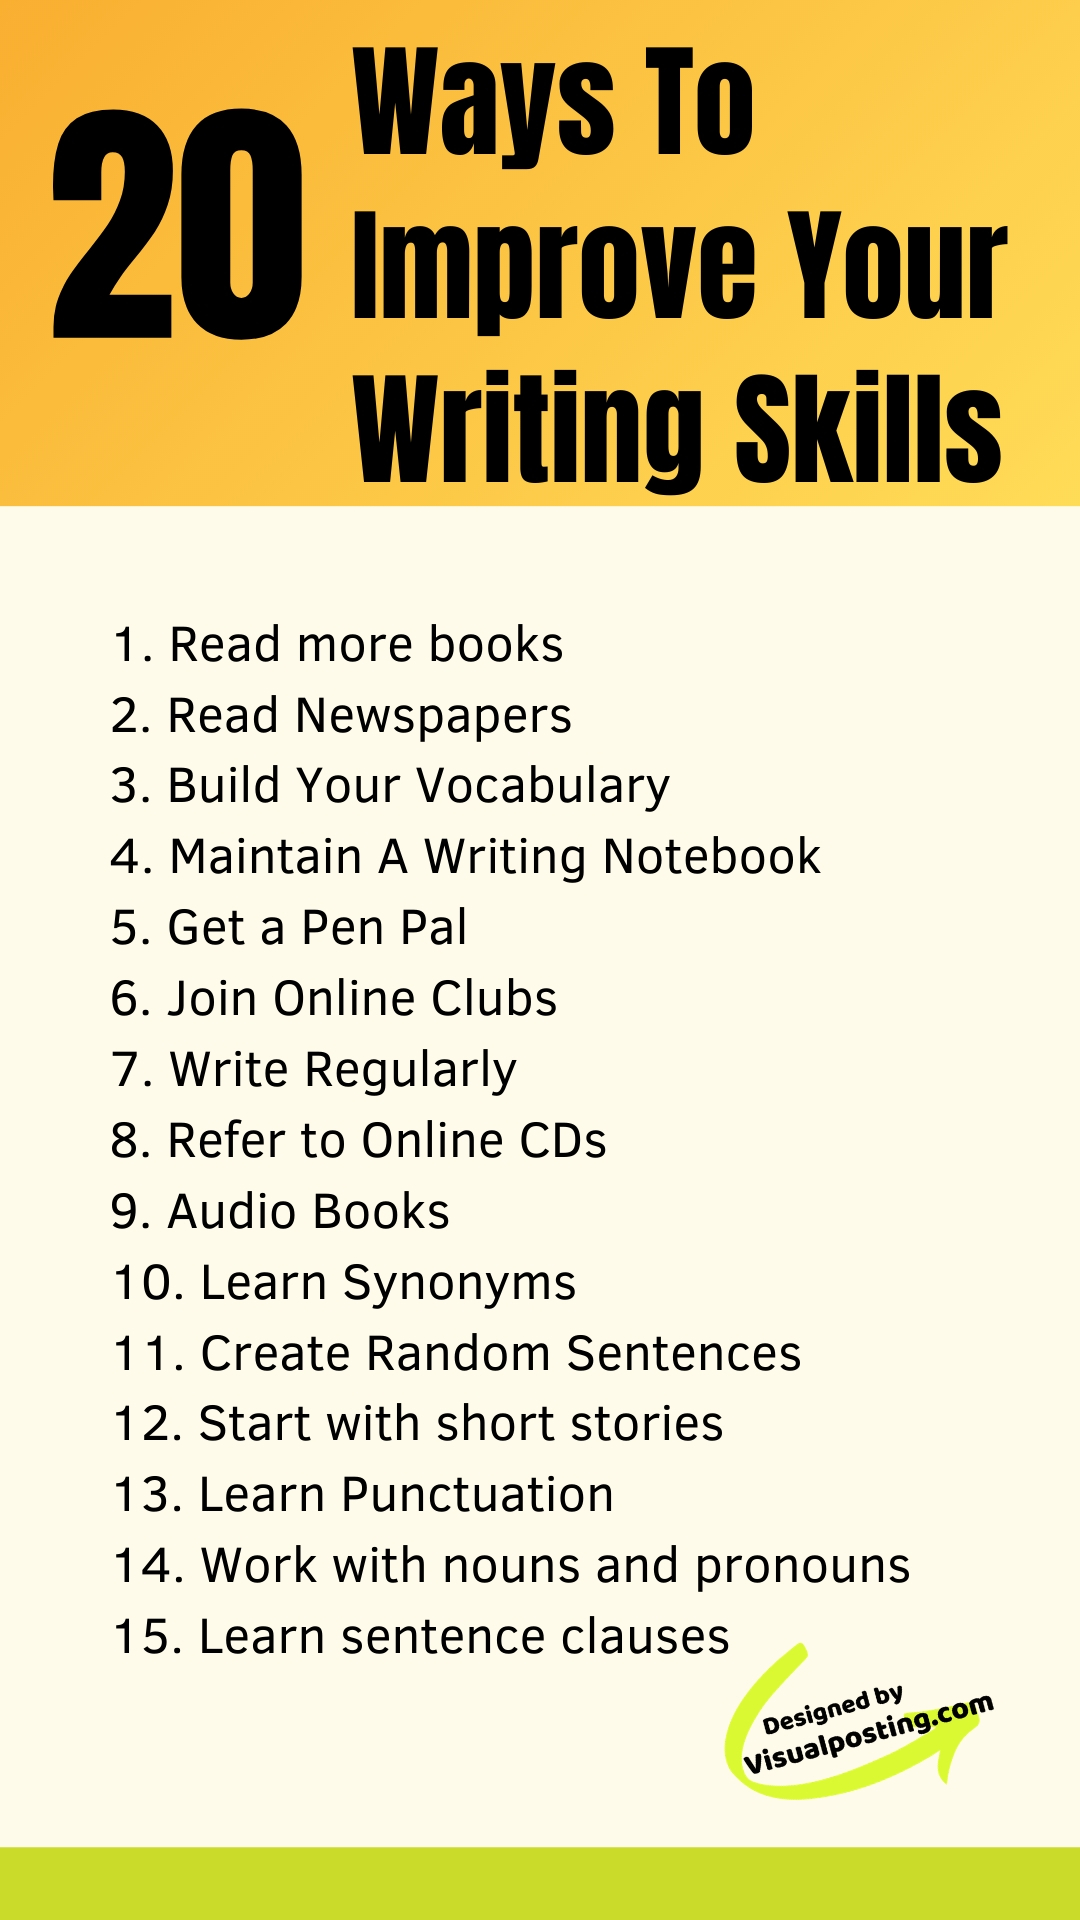 6 ways to improve your writing skills - Creativity